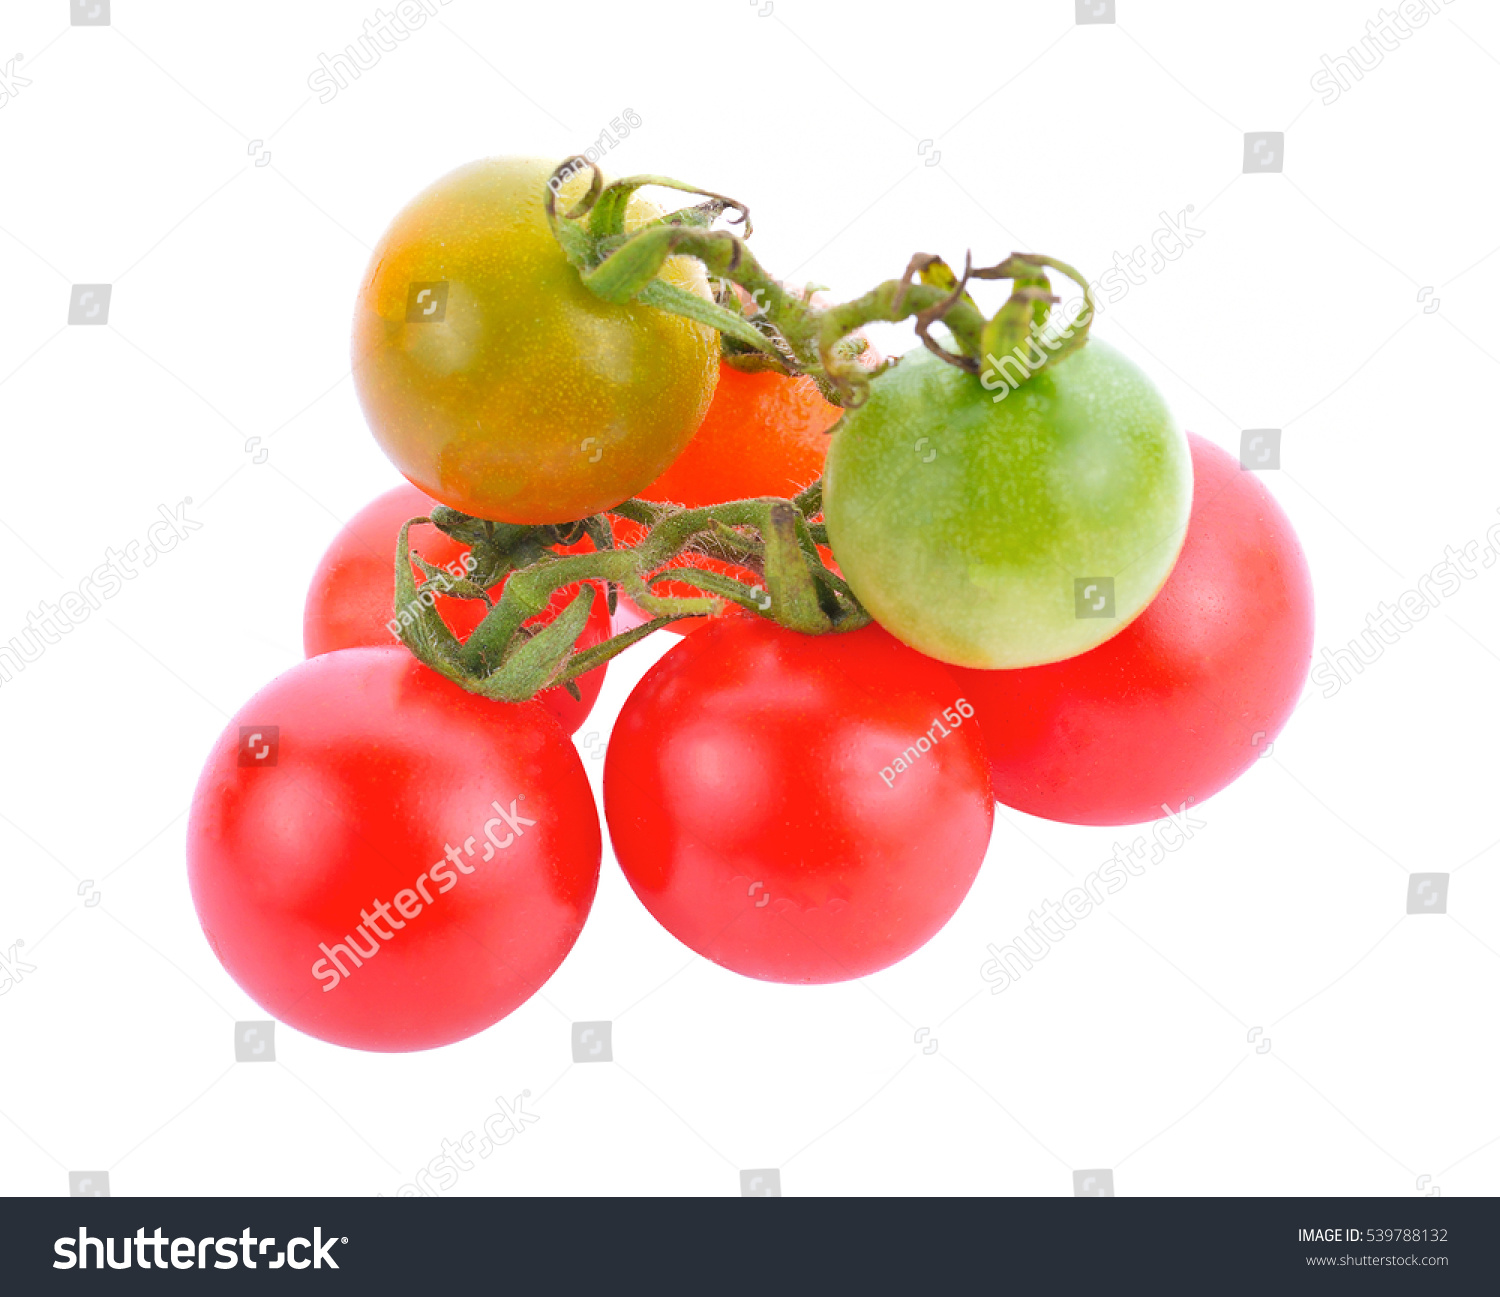 Cherry Tomato Vegetable Closeup Isolated On Stock Photo 539788132 ...